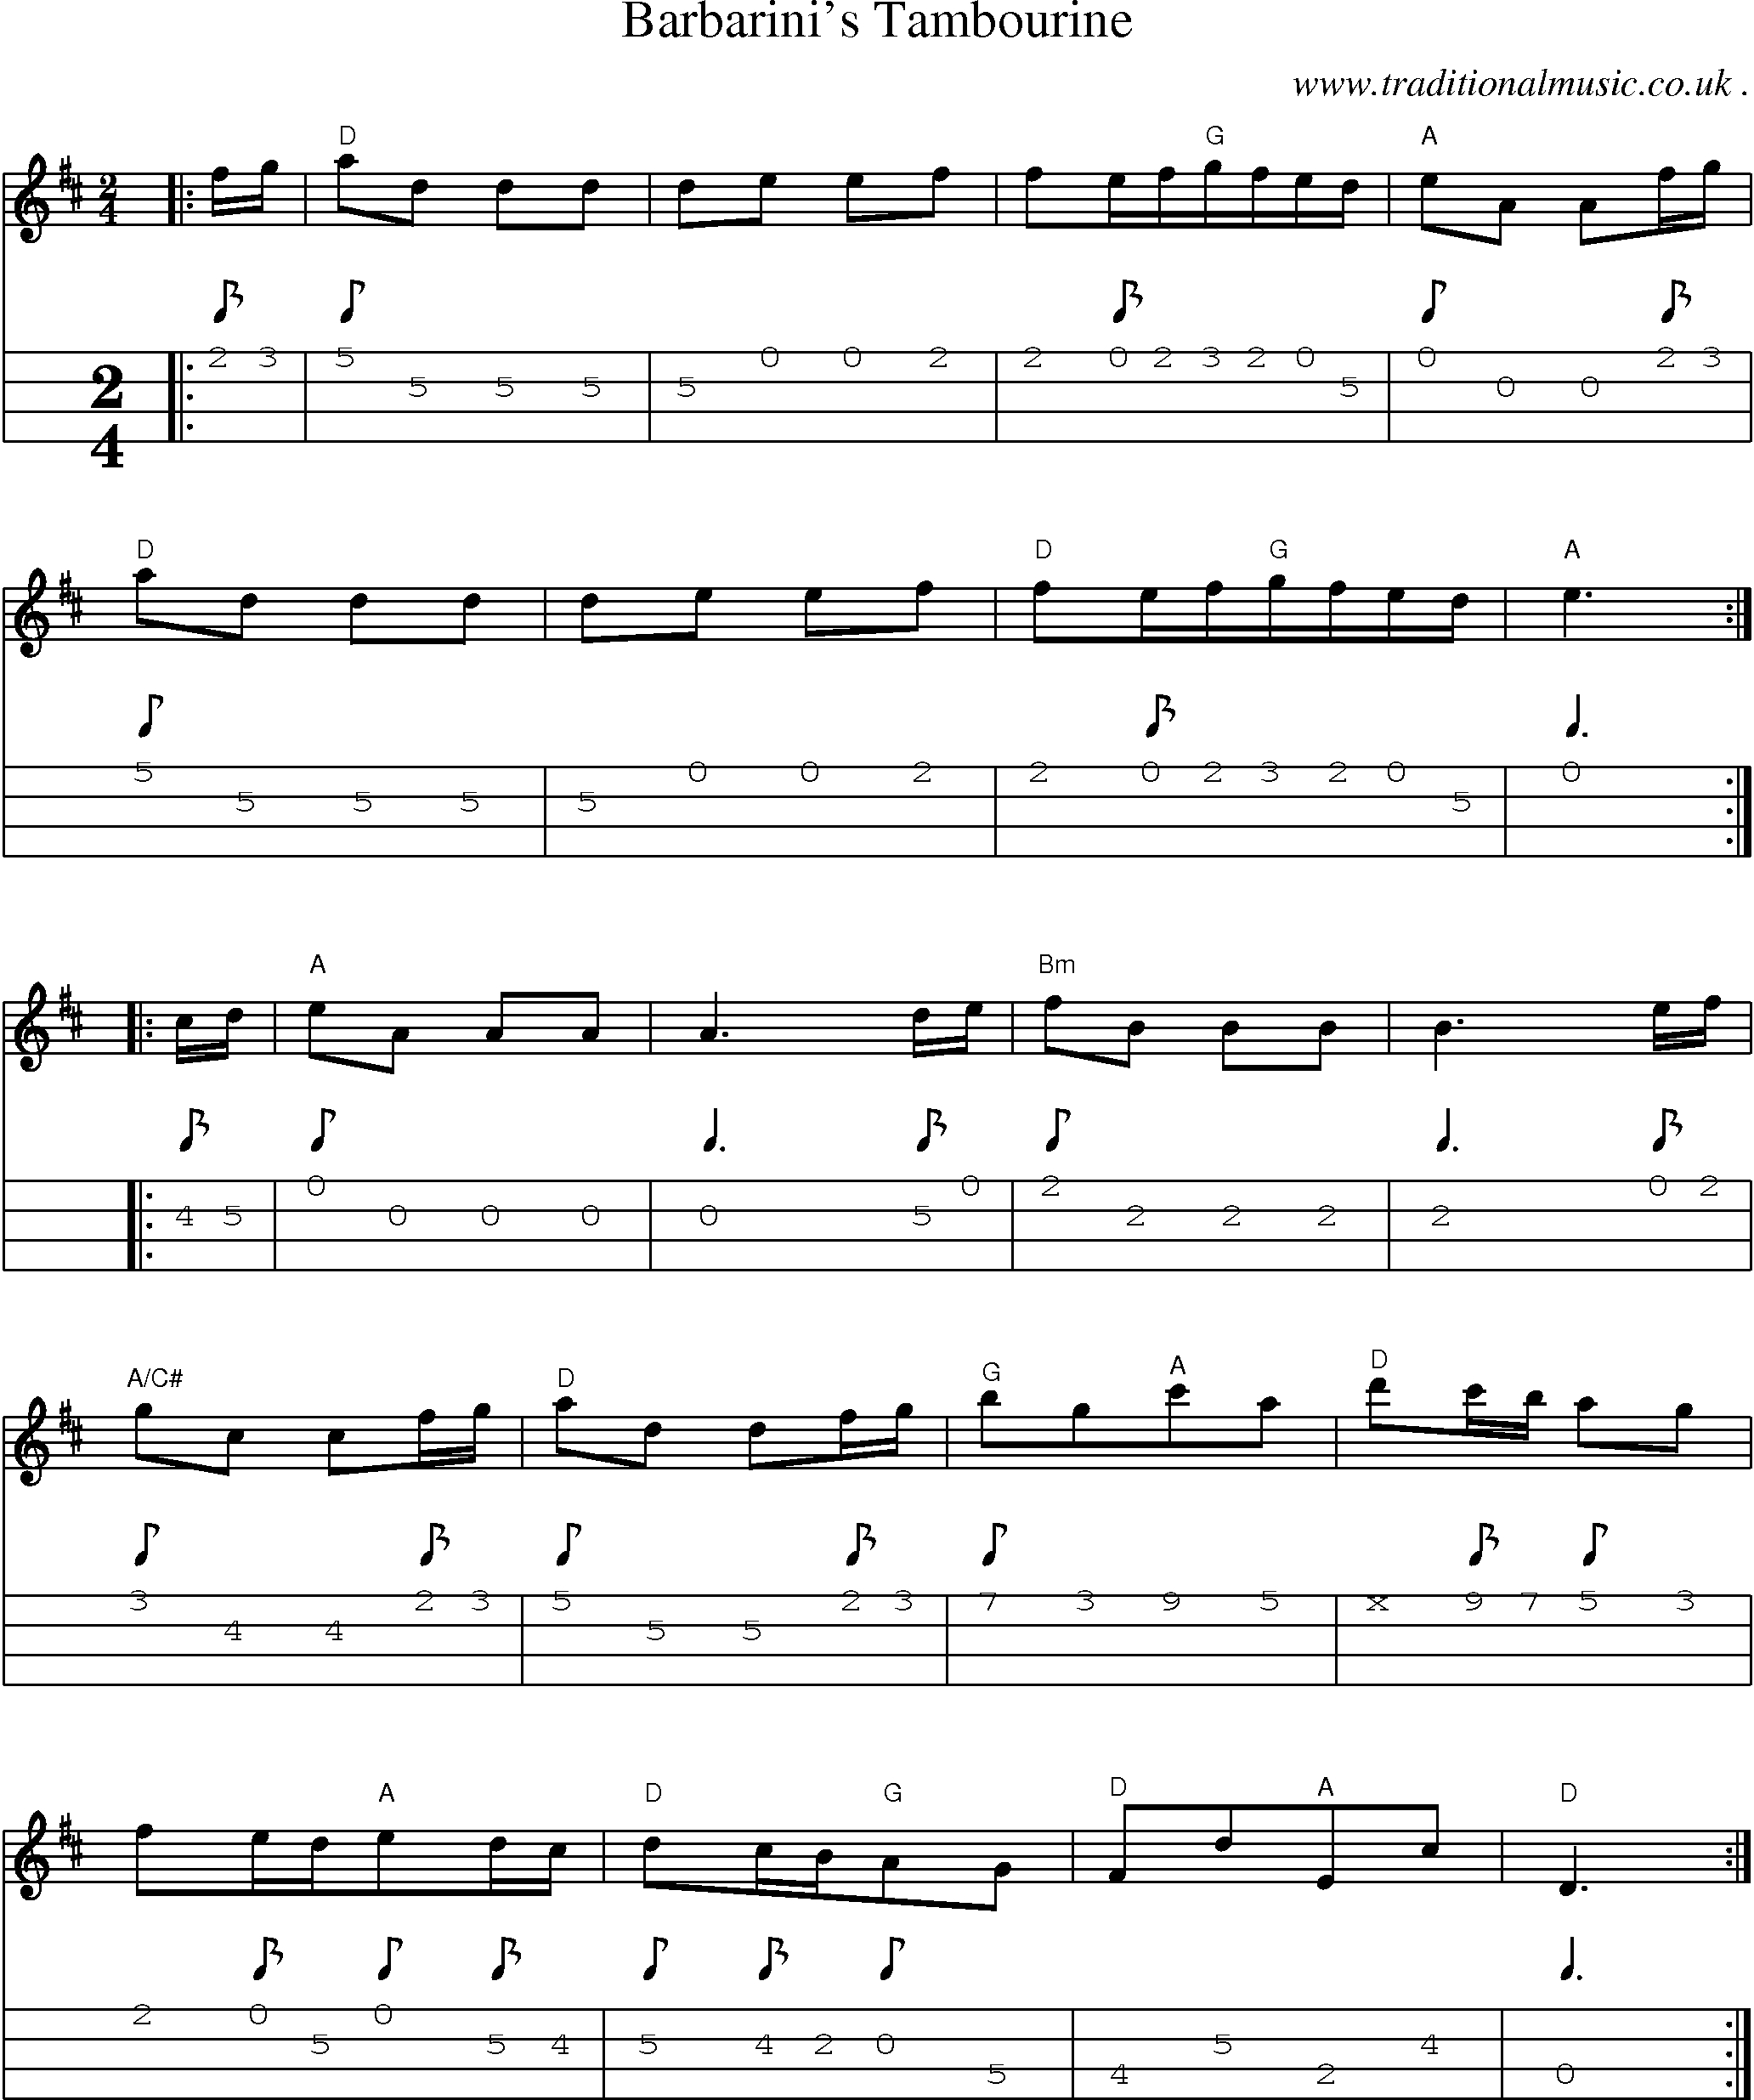 Sheet-Music and Mandolin Tabs for Barbarinis Tambourine